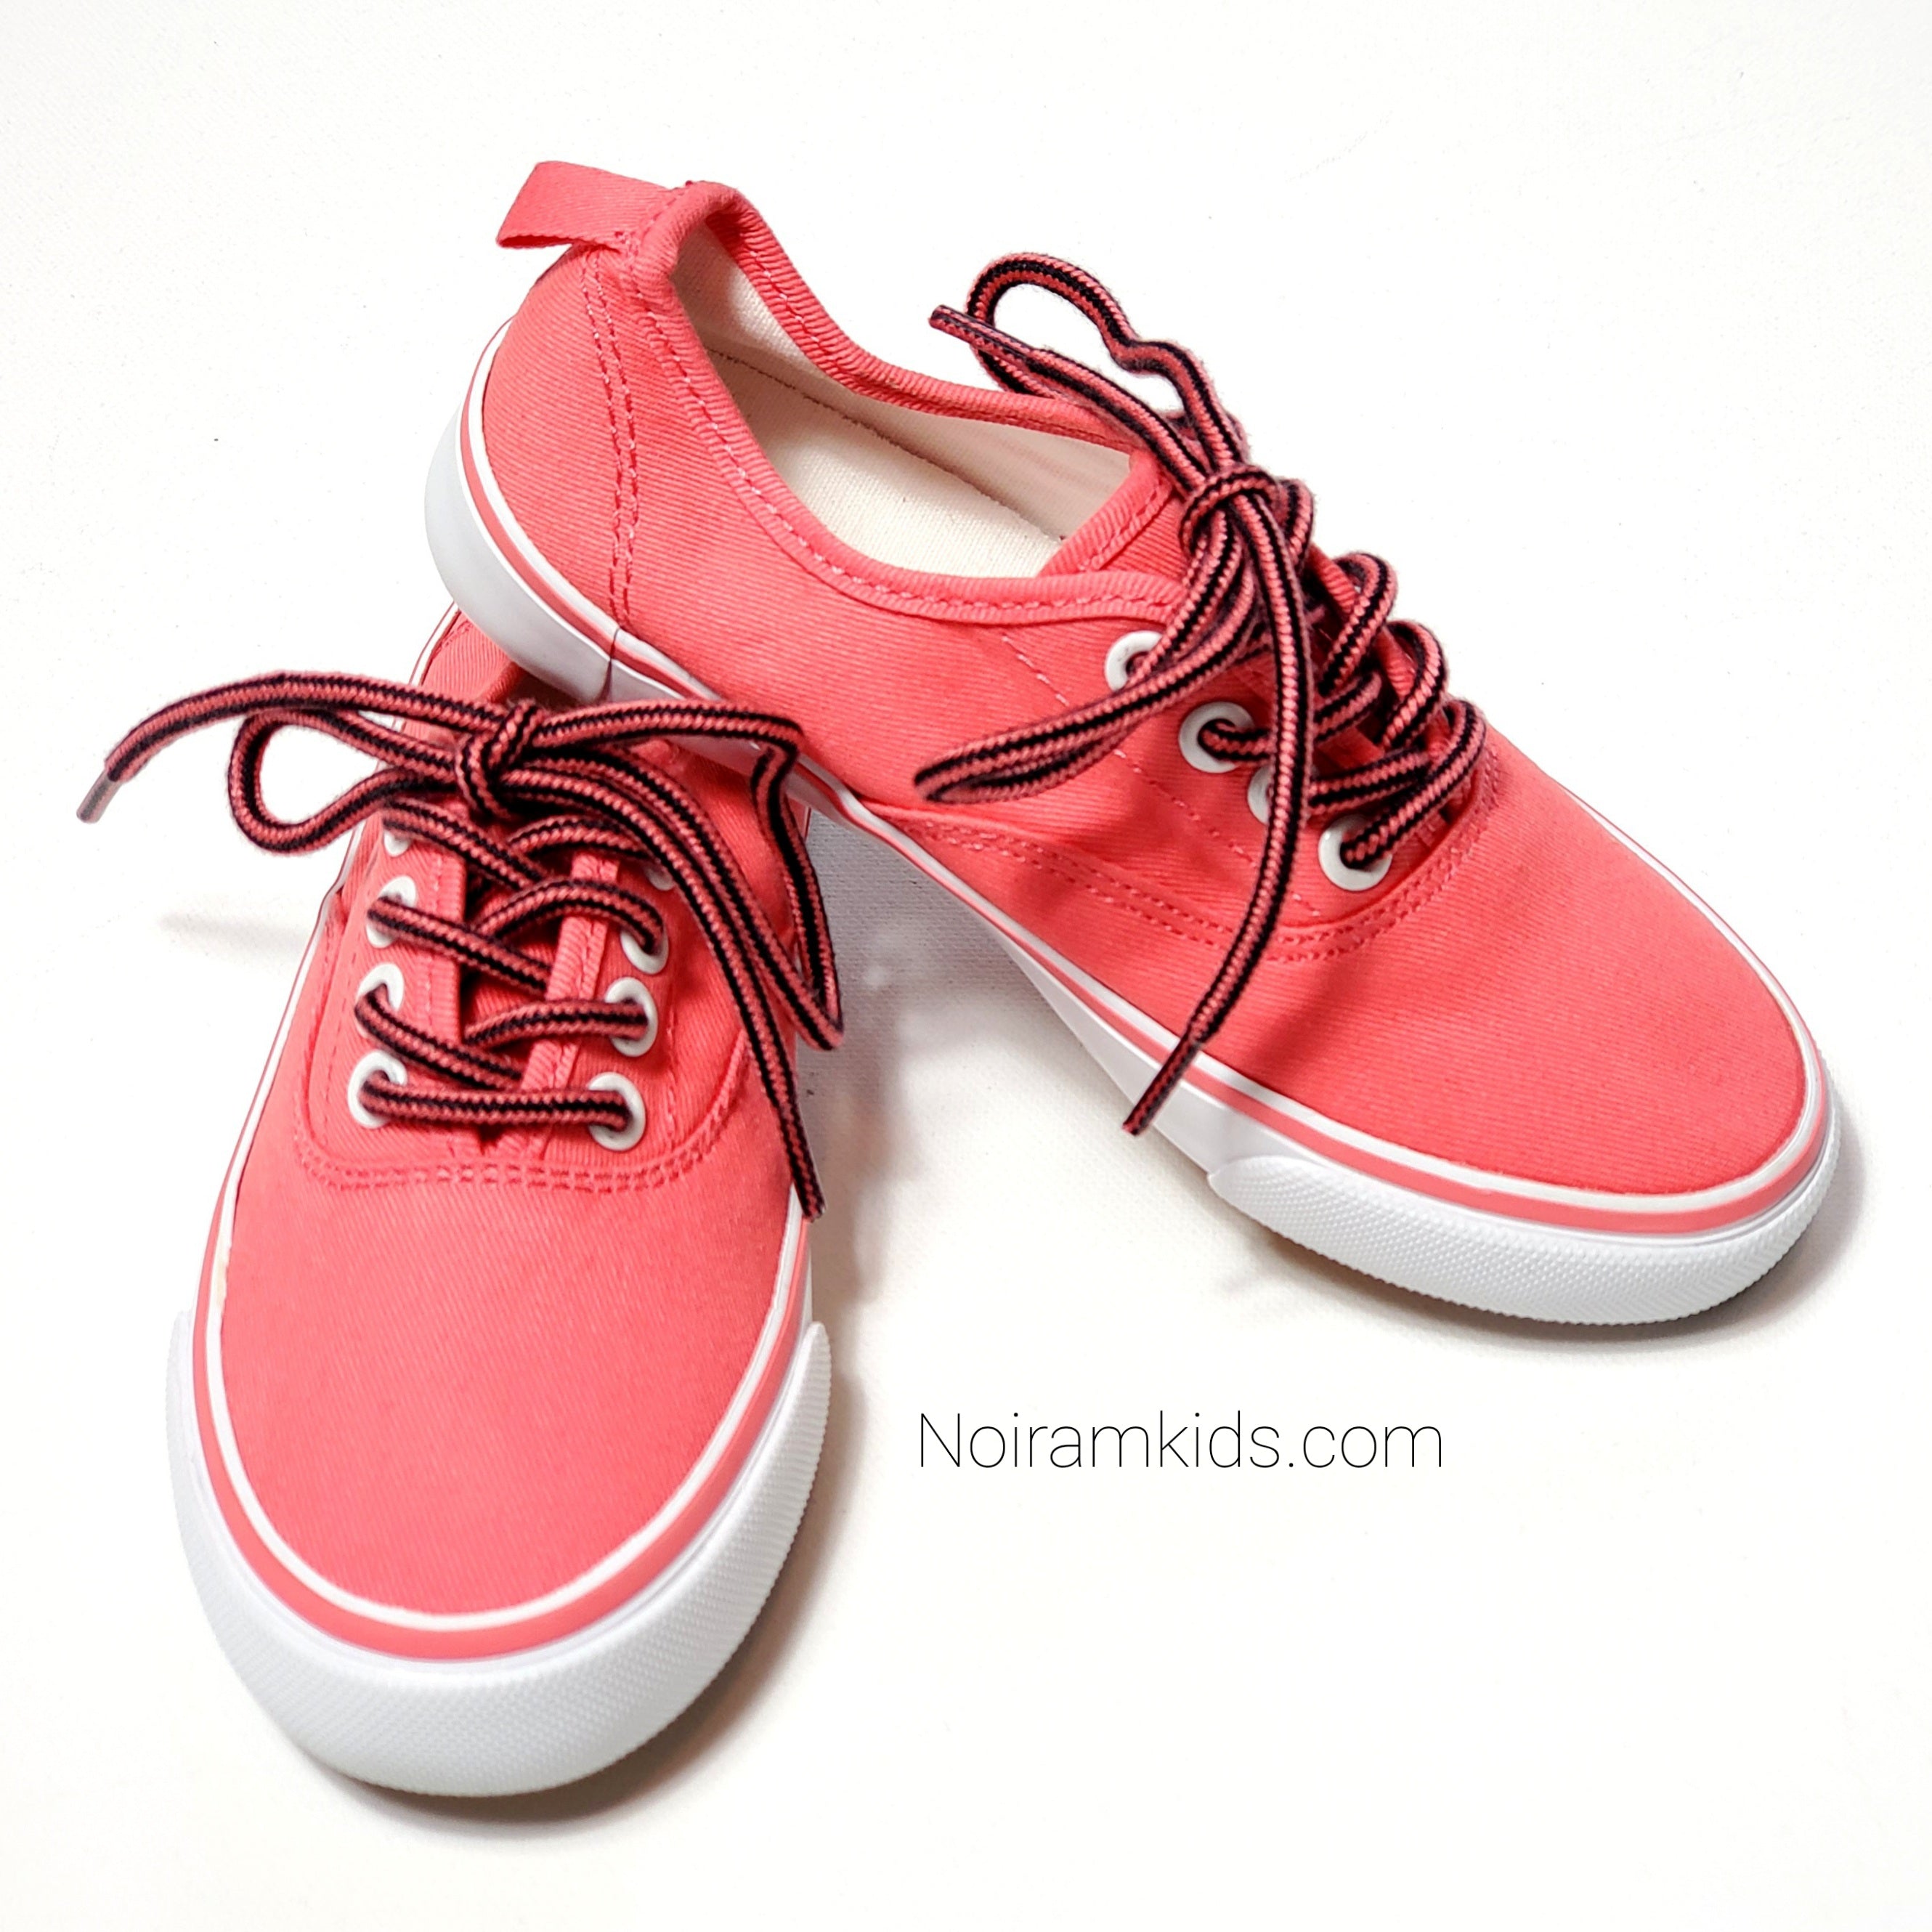 Buy Red Sneakers for Boys by SHOEKIDS Online | Ajio.com